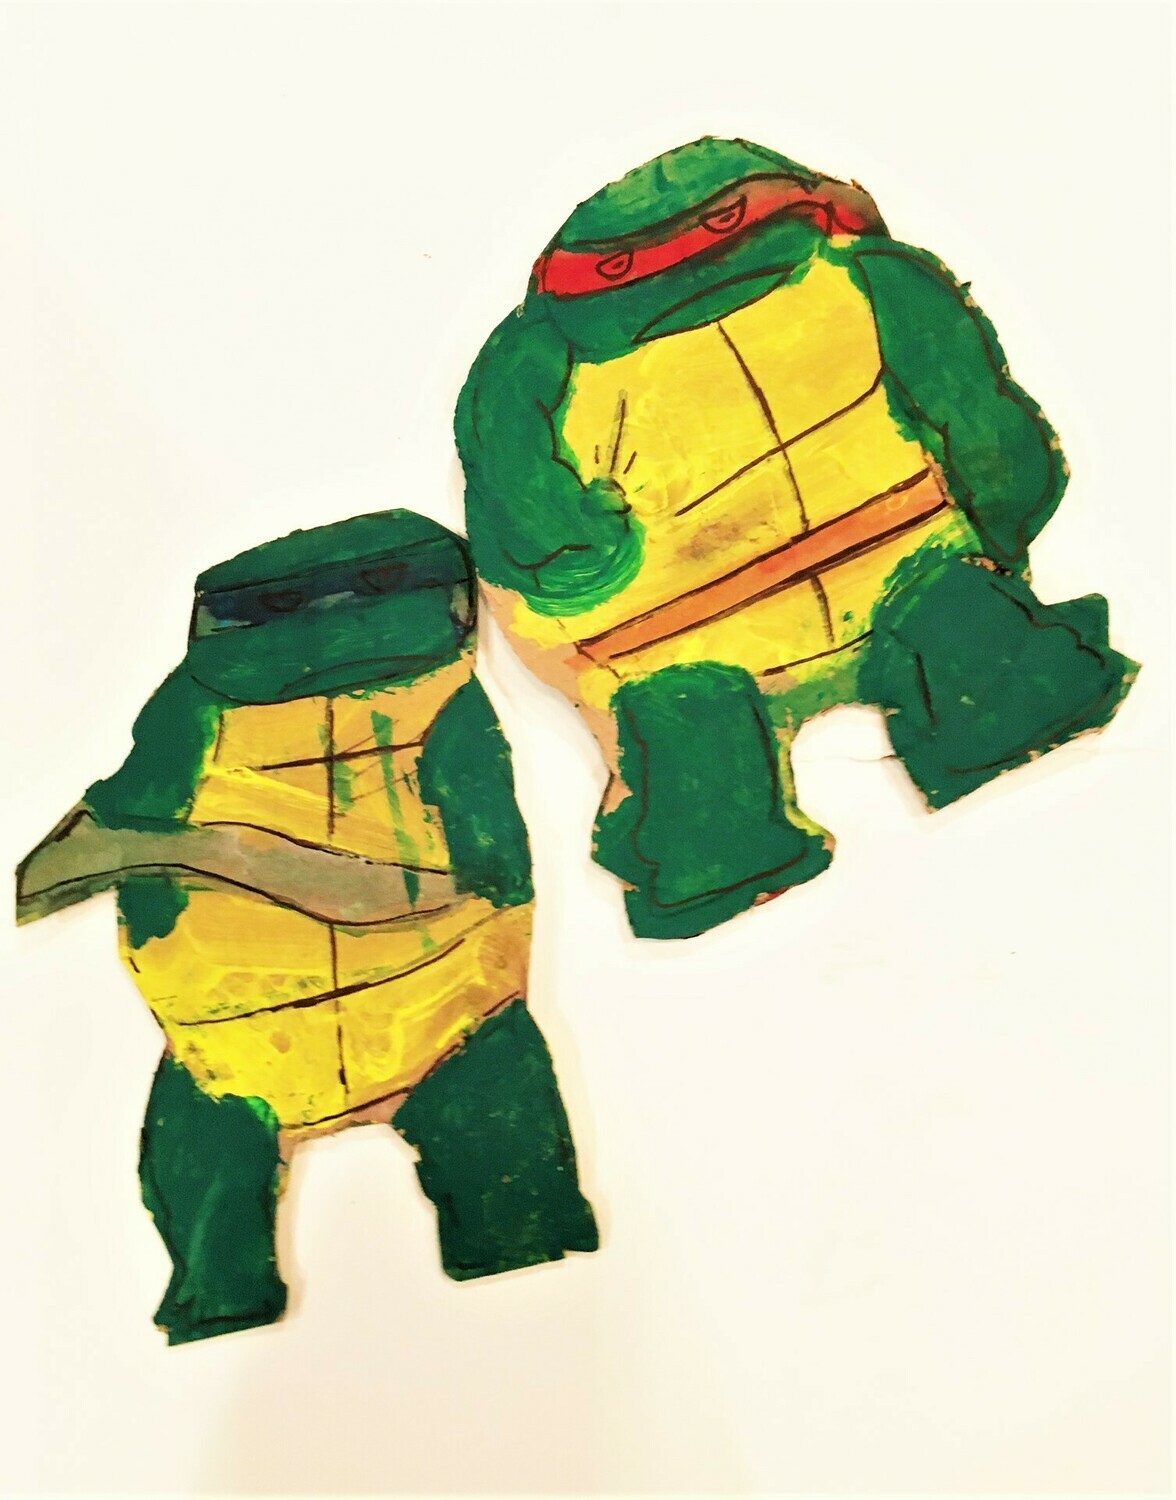 Raphael and Leonardo